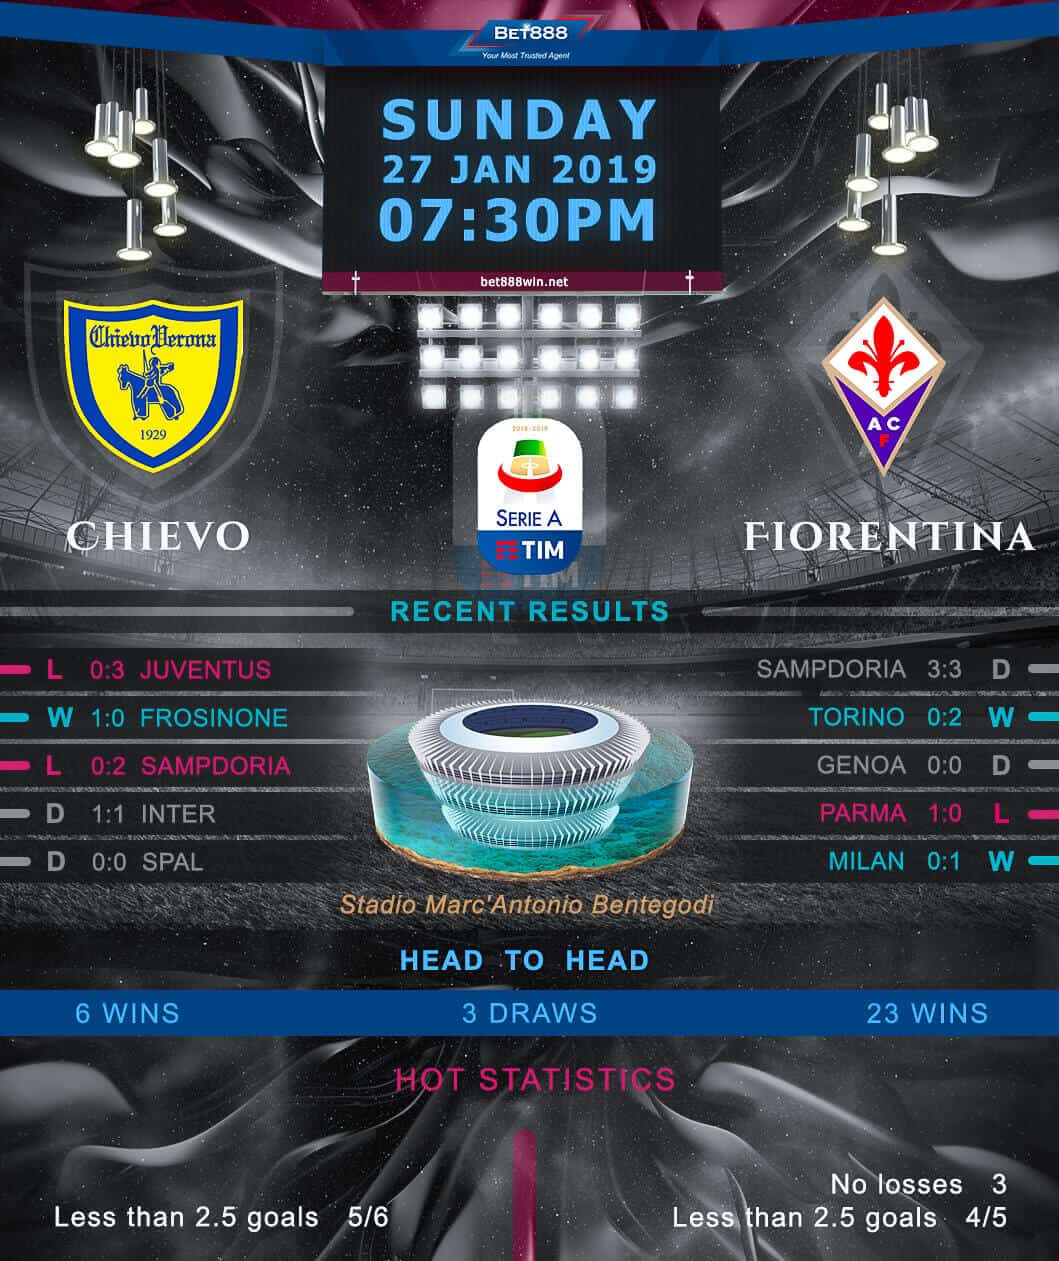 Chievo Verona vs Fiorentina﻿ 27/01/19